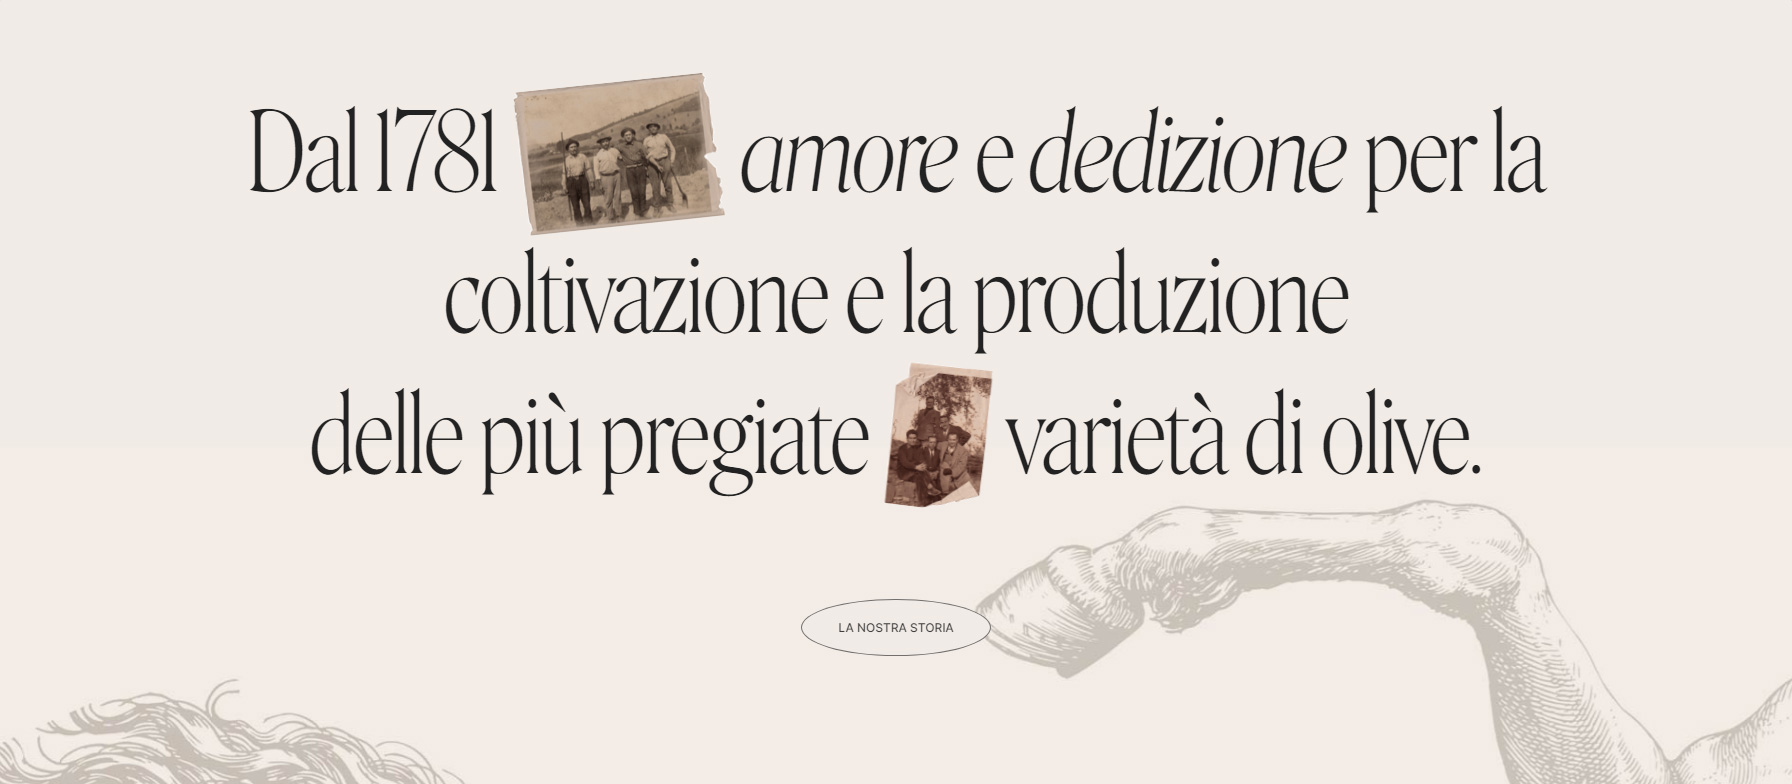 Frantoio Cavalli - Website of the Day